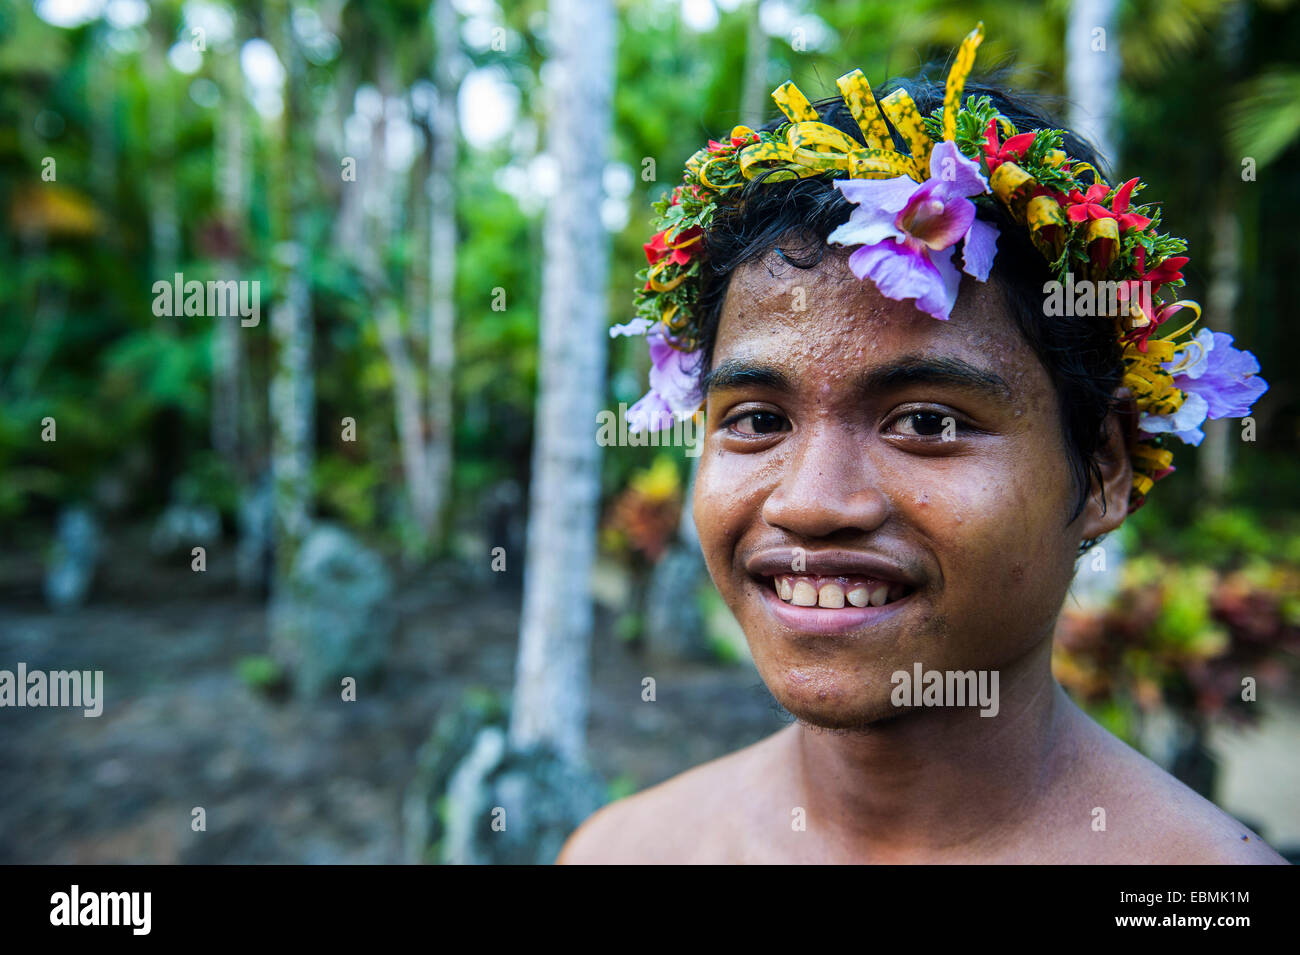 Young man with headdress made of flowers, Yap Island, Caroline Islands, Micronesia Stock Photo